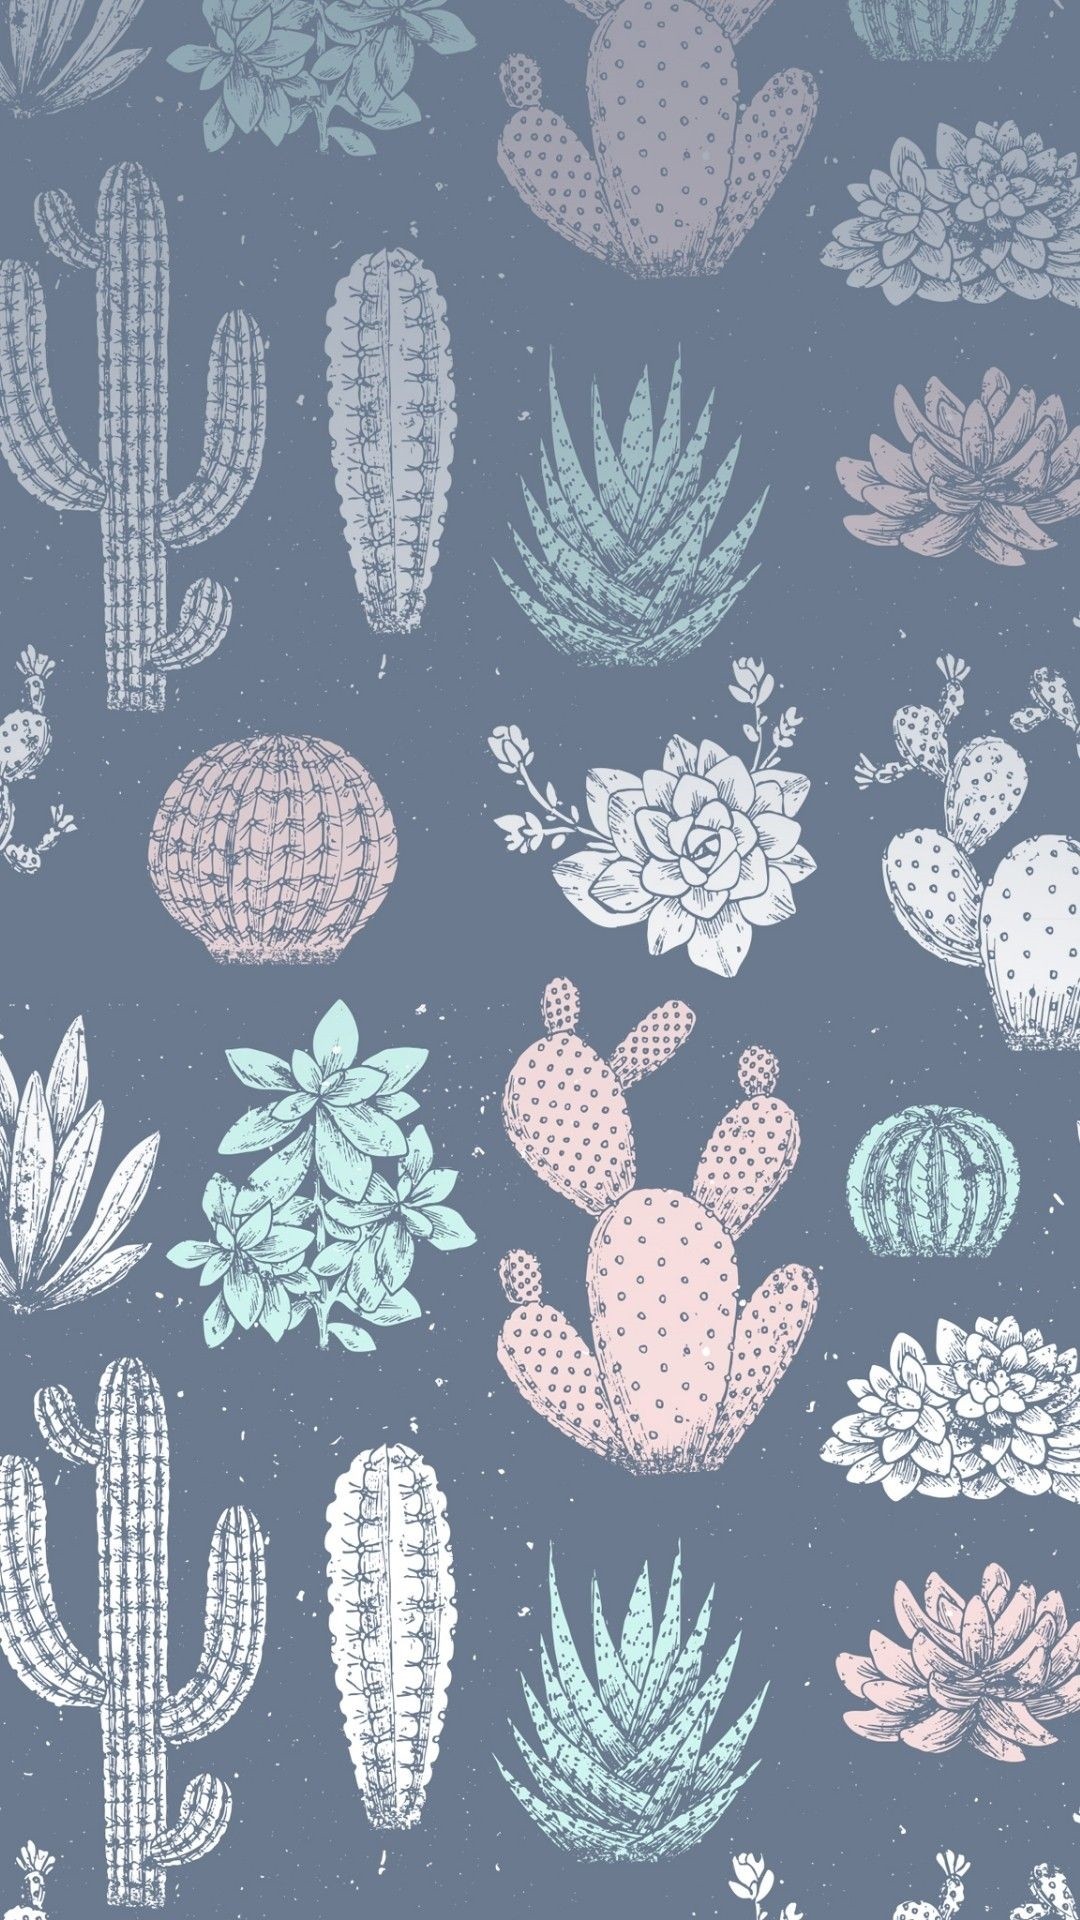 Cactus iphone wallpaper